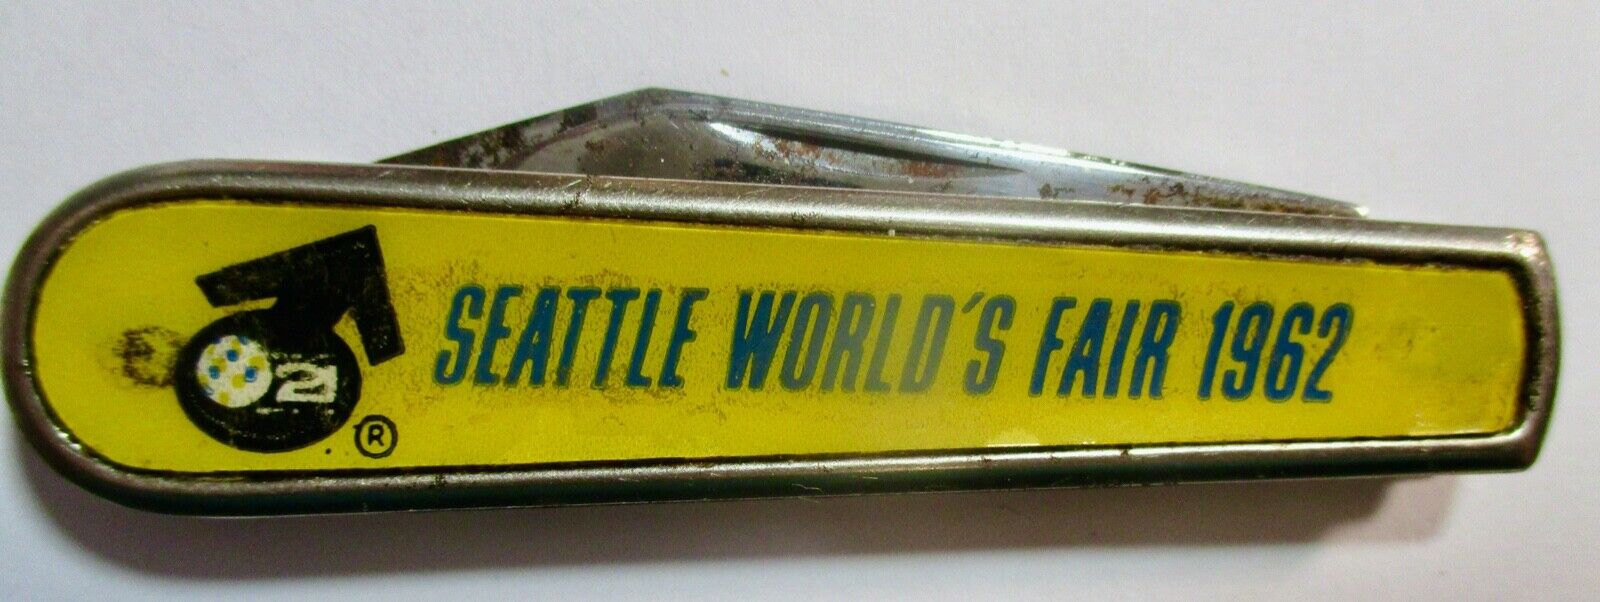 1962 SEATTLE WORLD\'S FAIR CENTURY 21 EXPO SOUVENIR POCKET KNIFE